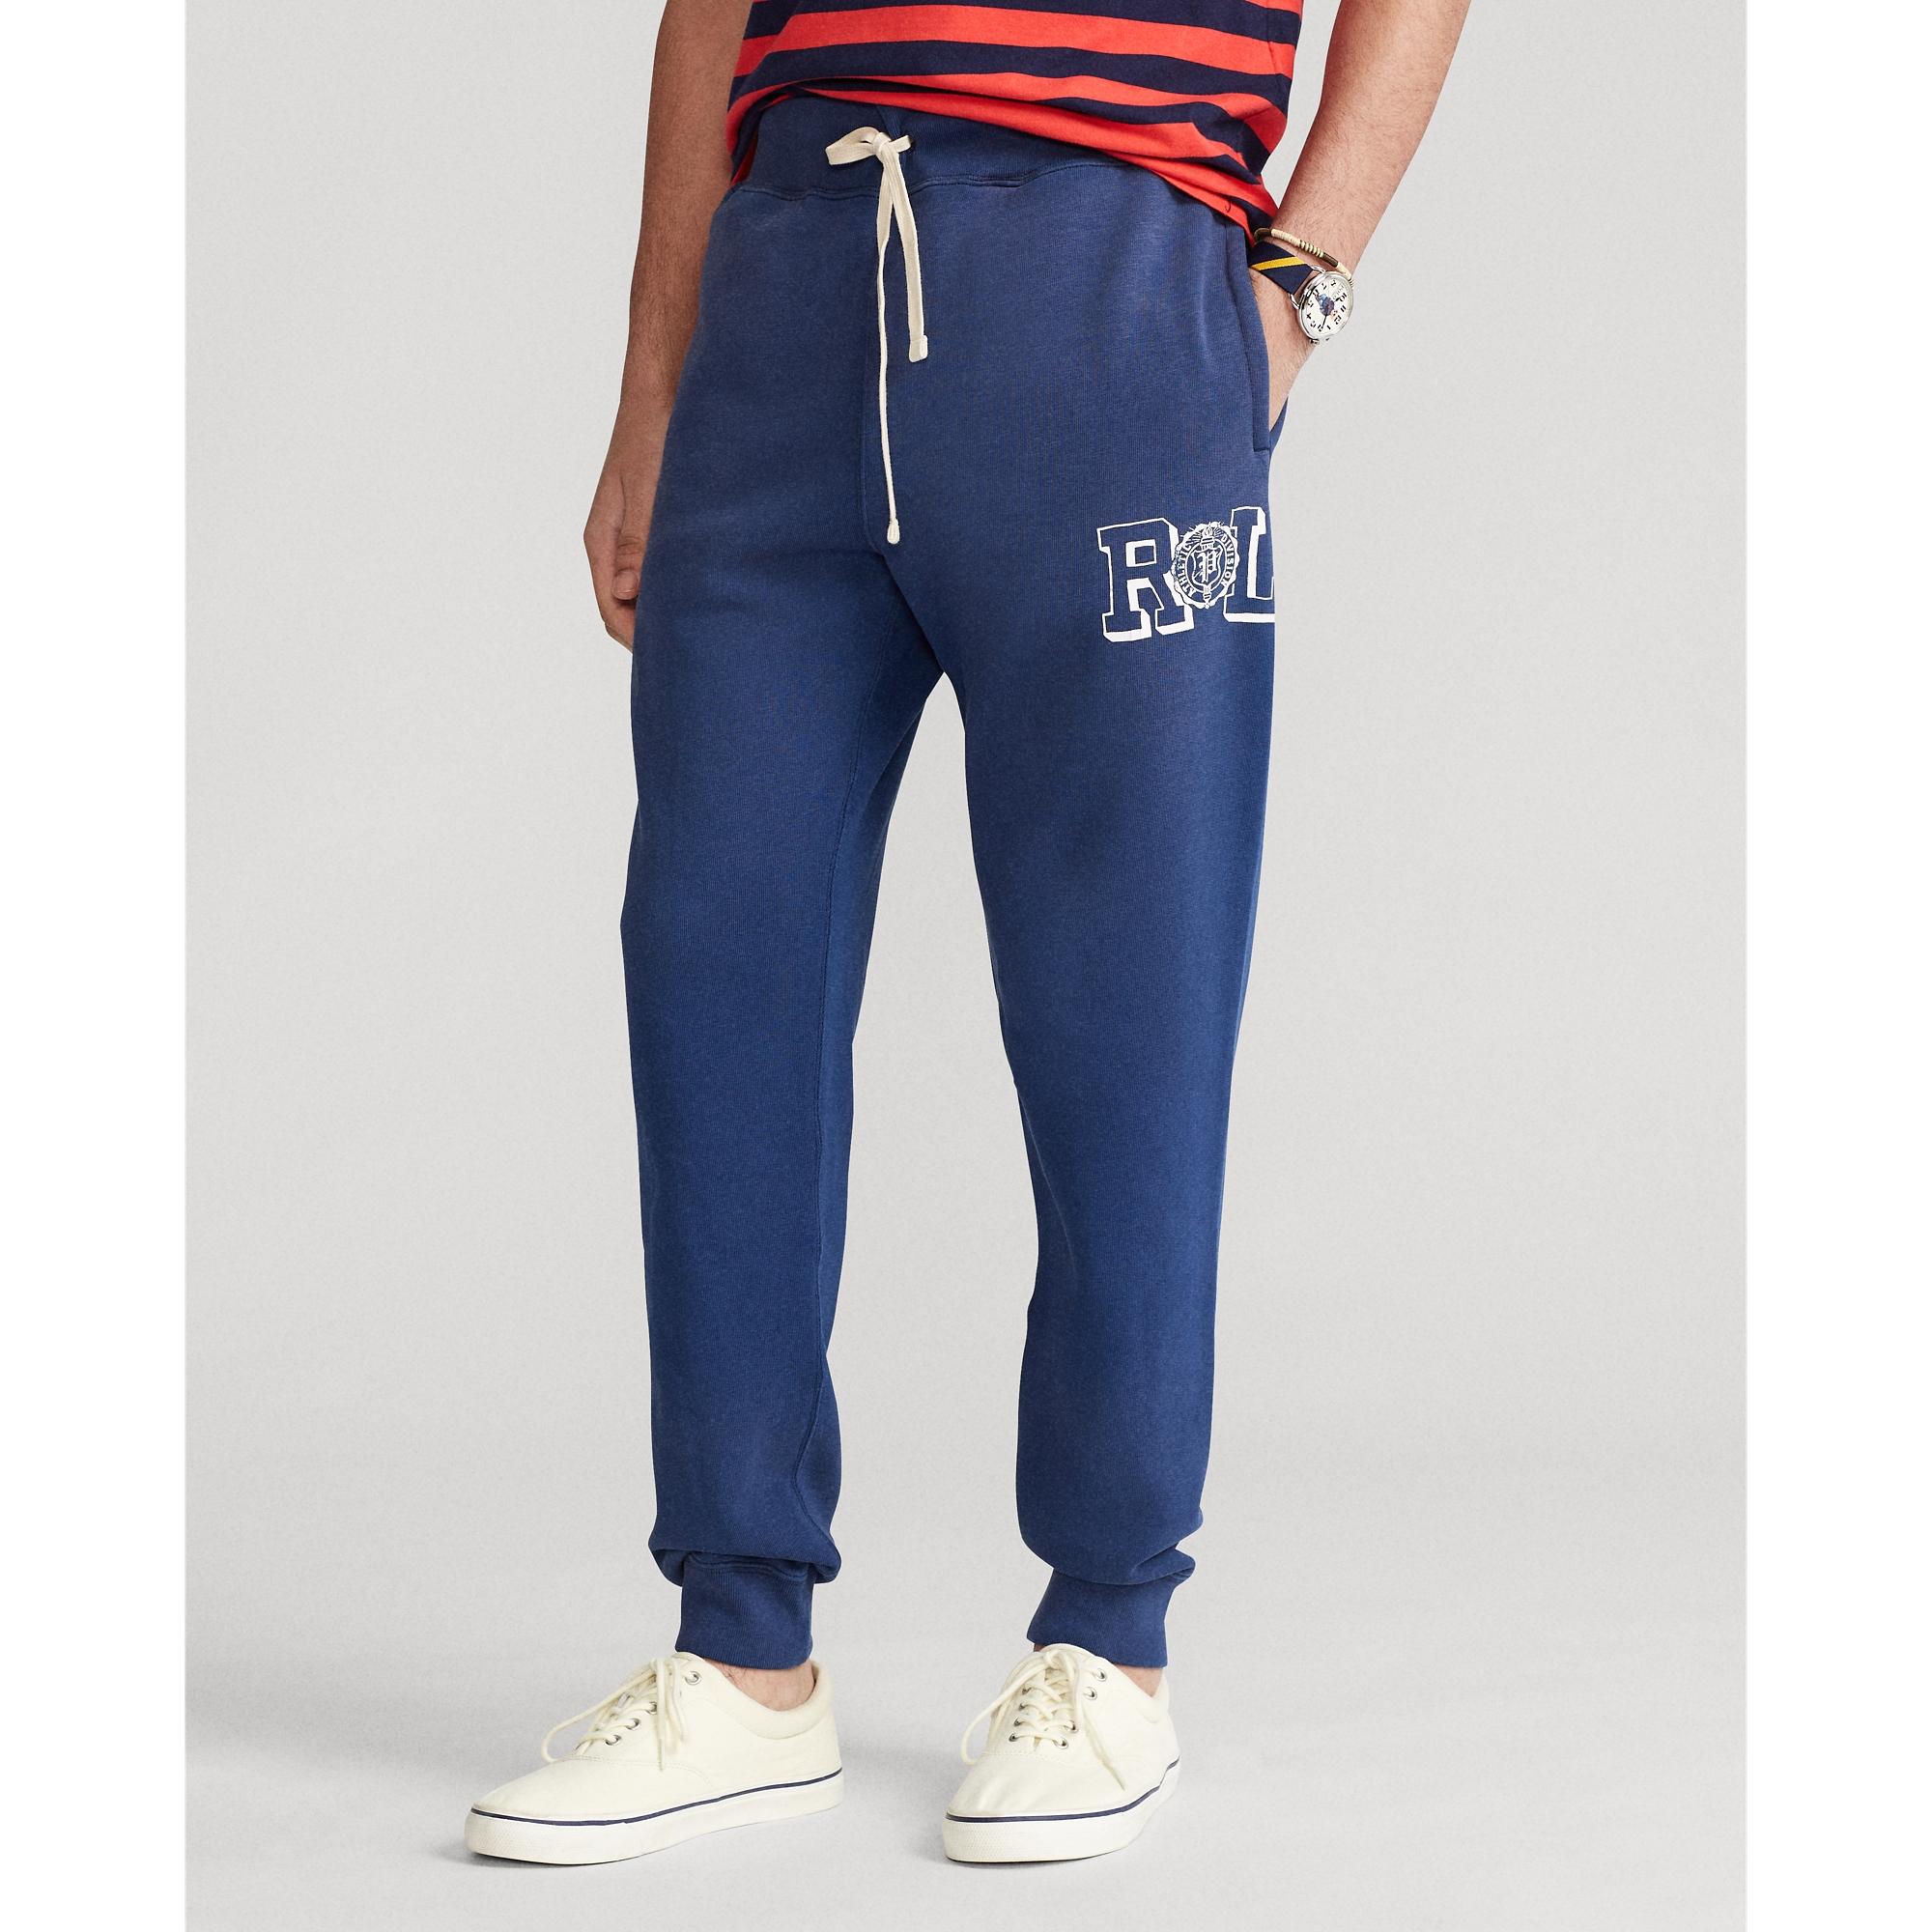 Polo Ralph Lauren Fleece Graphic Jogger Pant in Blue for Men - Lyst